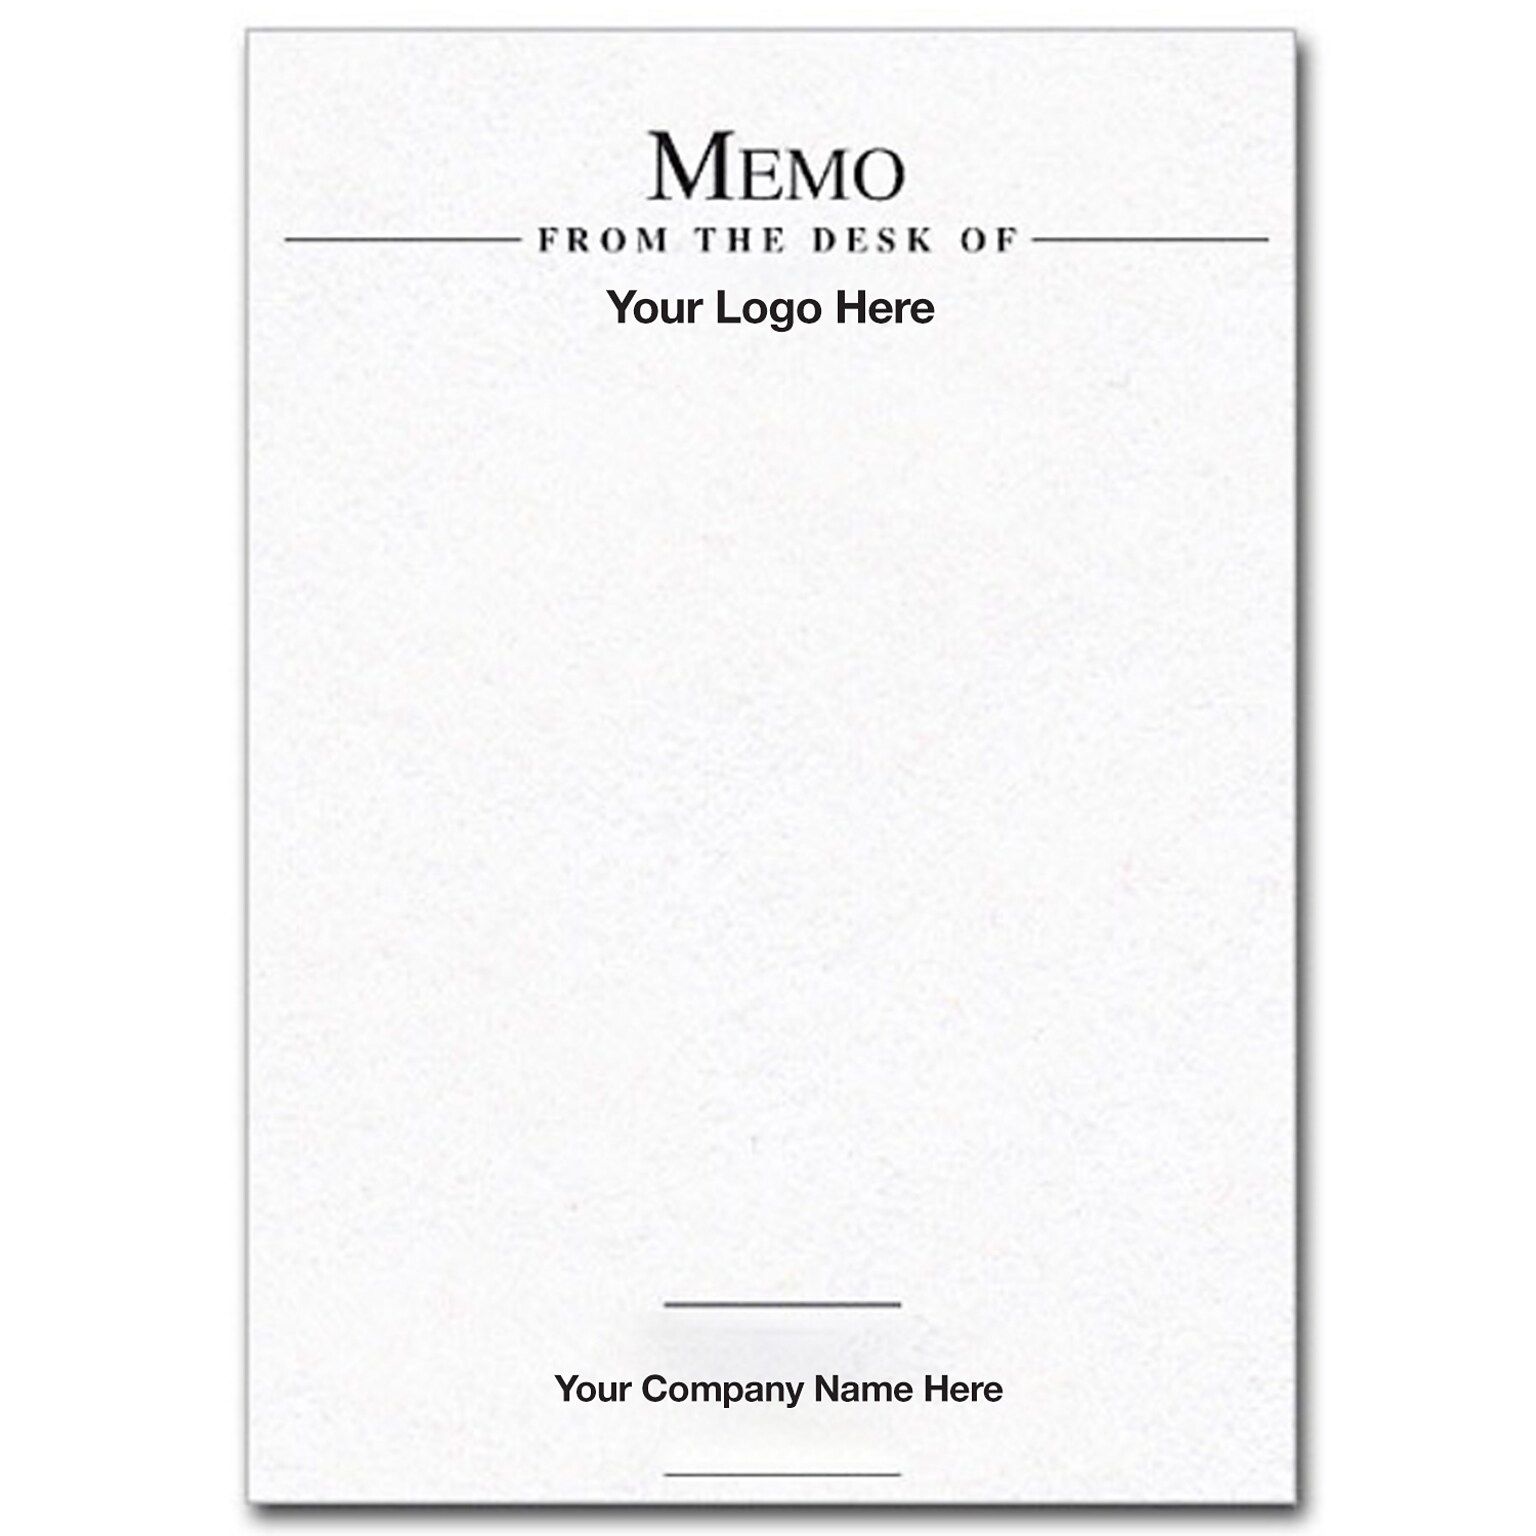 Custom Memo Pads, 60# Text Stock, 4 x 5.5, 1 Standard Ink, Flat Ink, 100 Sheets per Pad